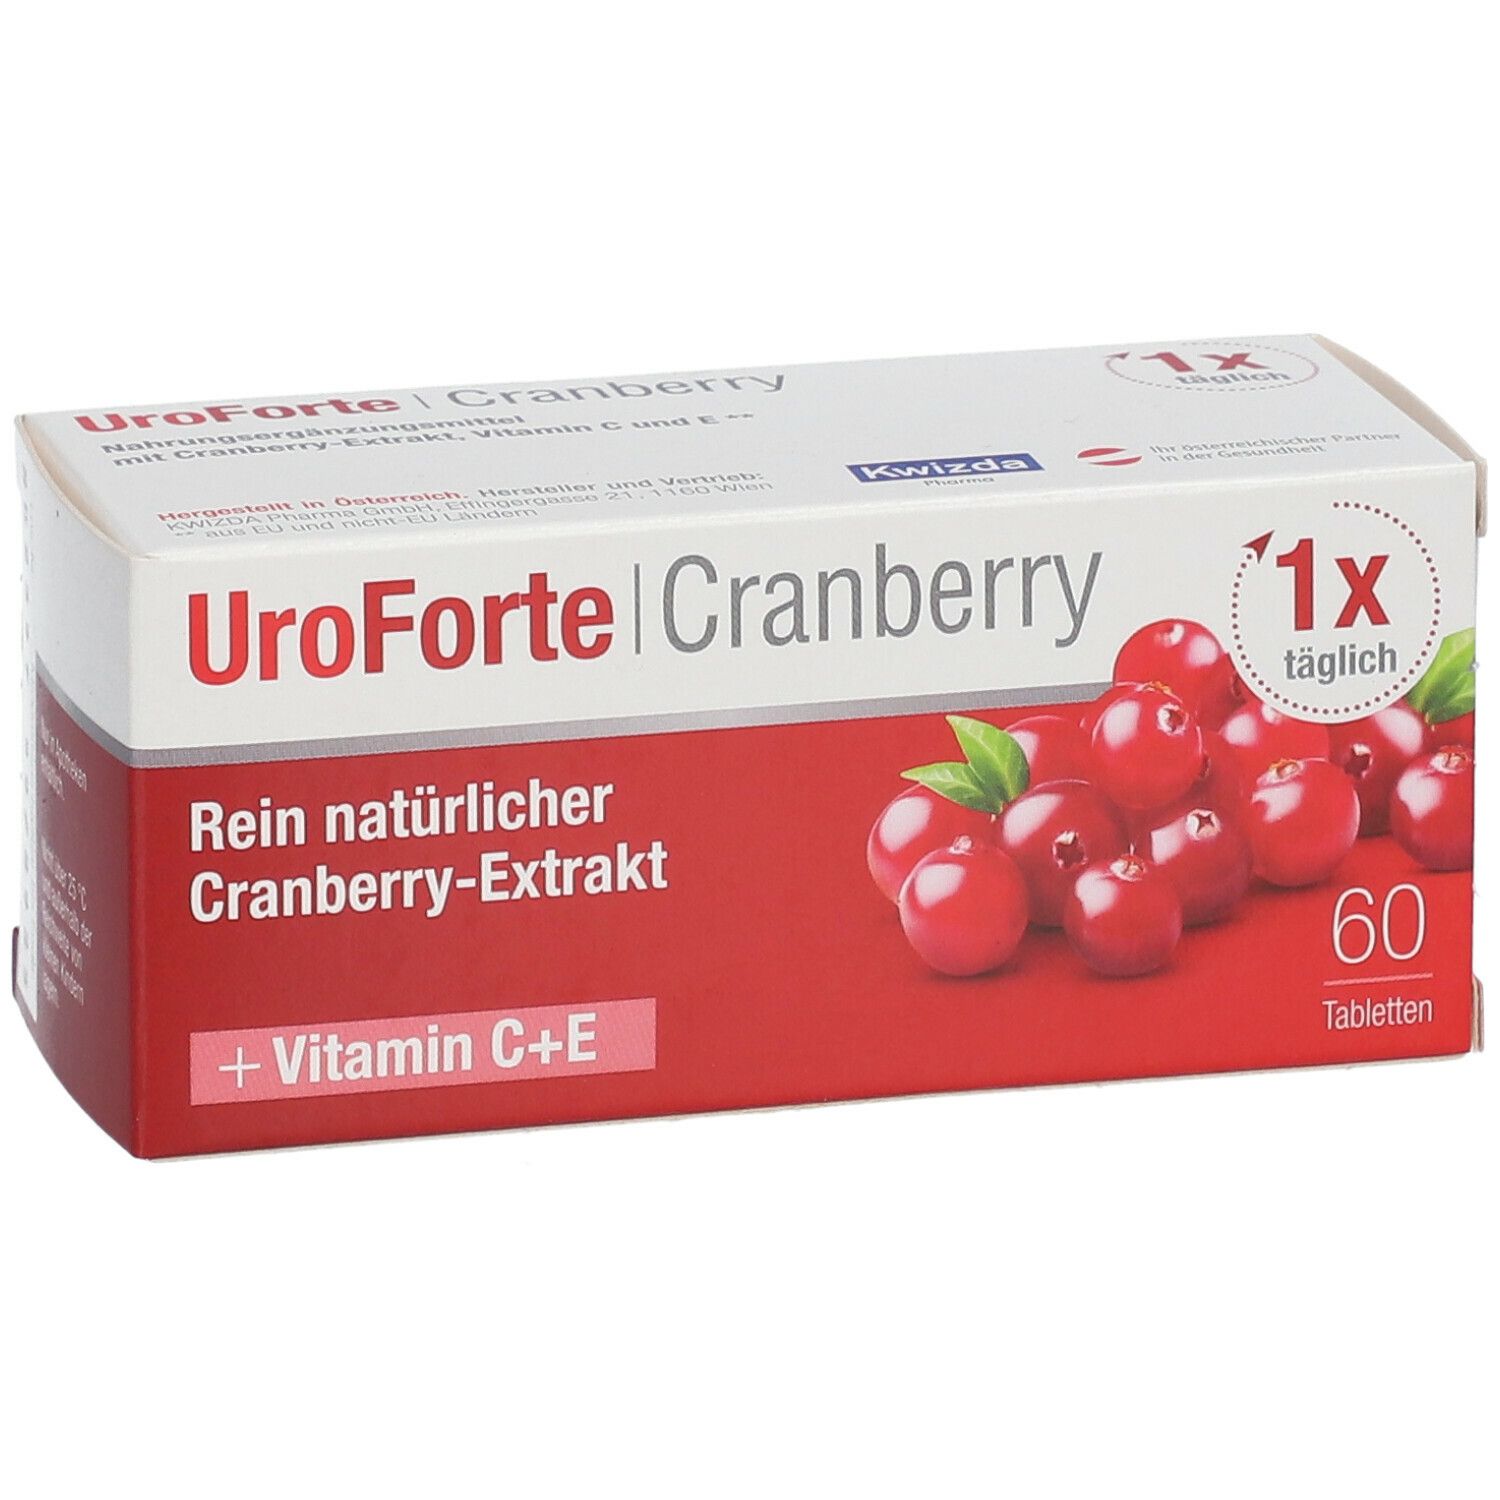 BIOGELAT® Cranberry UroForte Filmtabletten